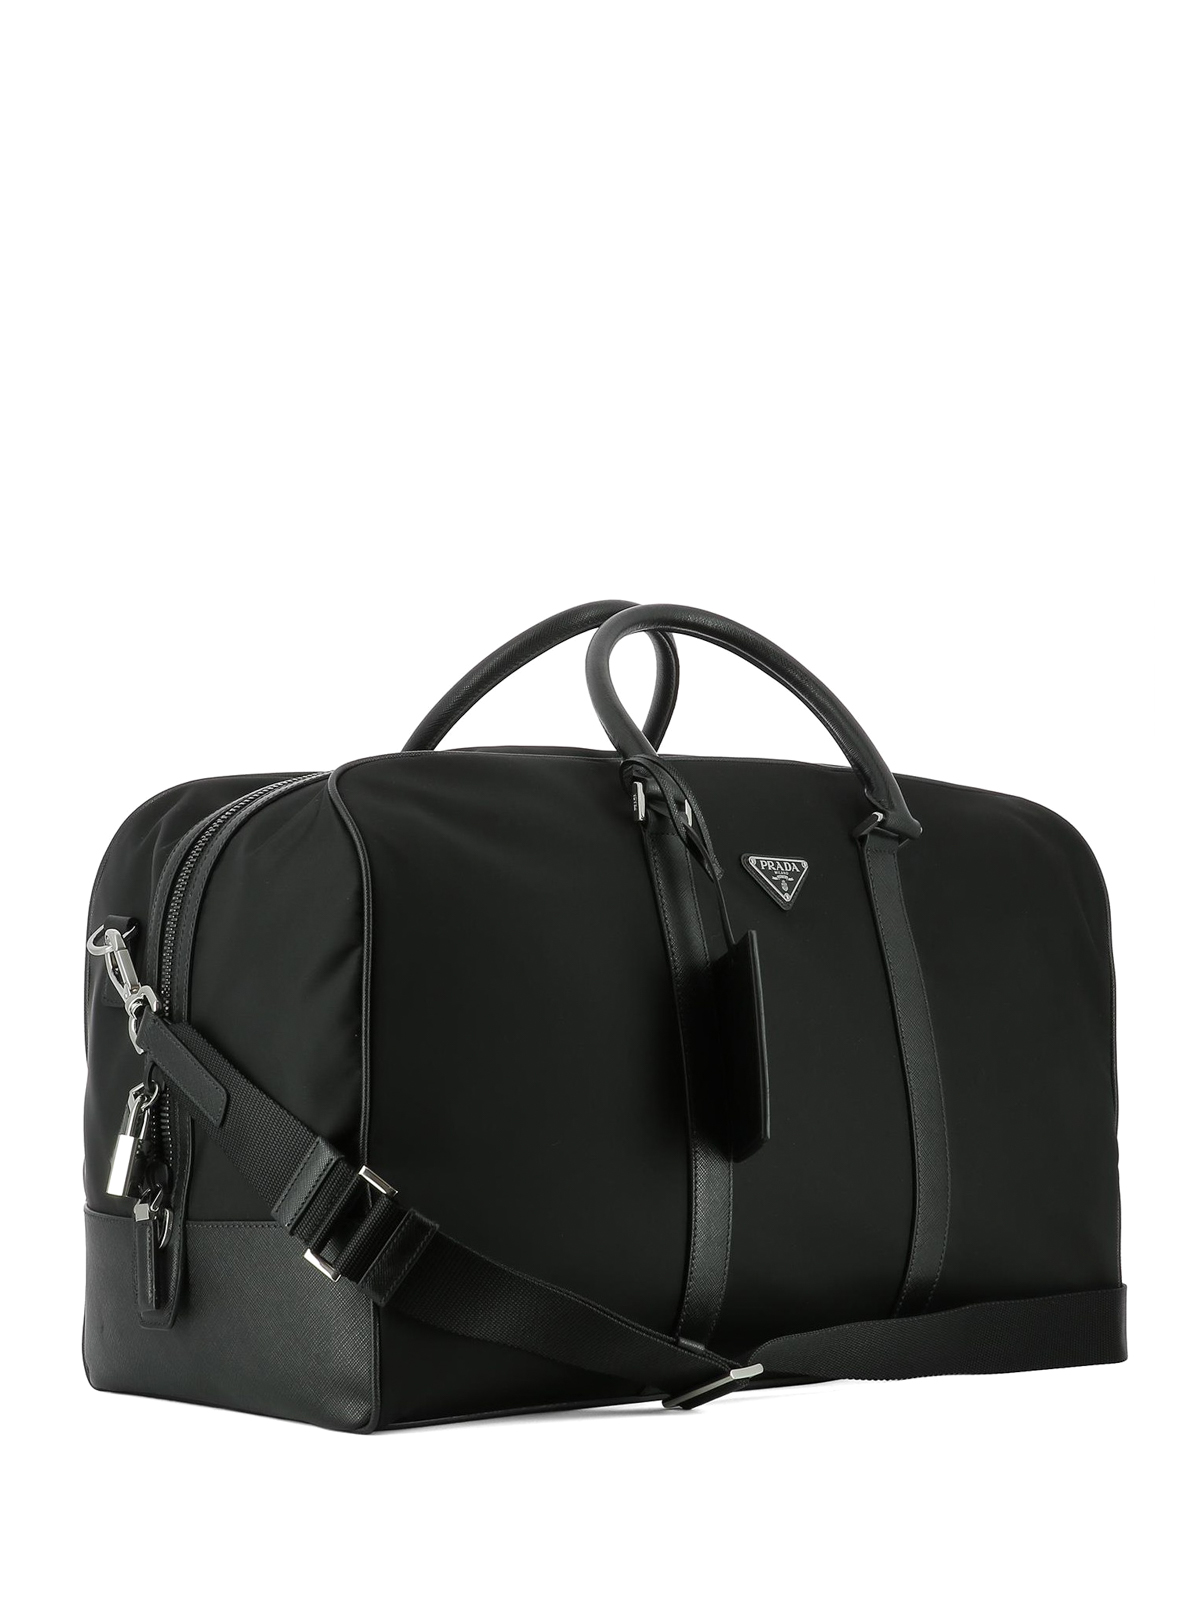 Luggage & Travel bags Prada - Fabric travel duffle bag